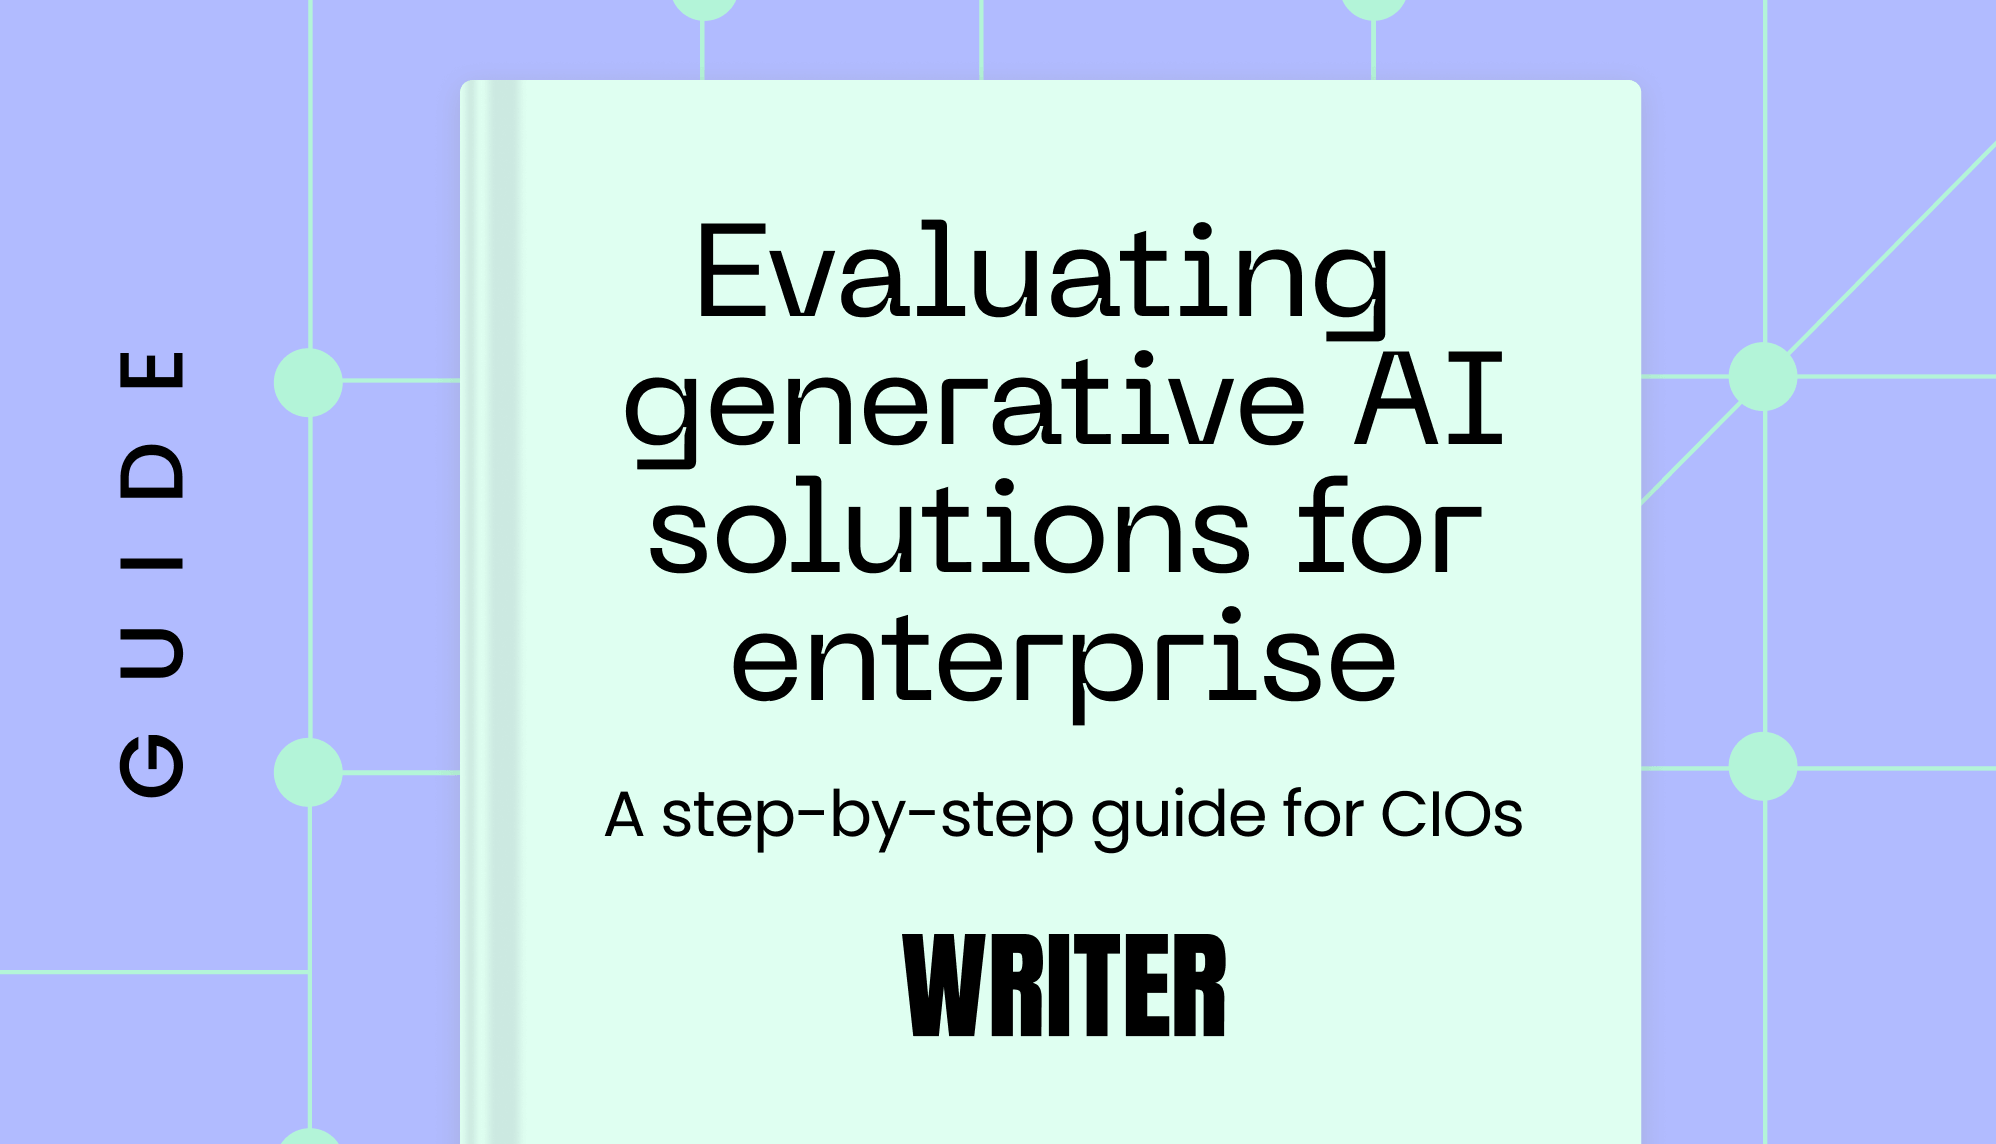 Evaluating generative AI solutions for enterprise